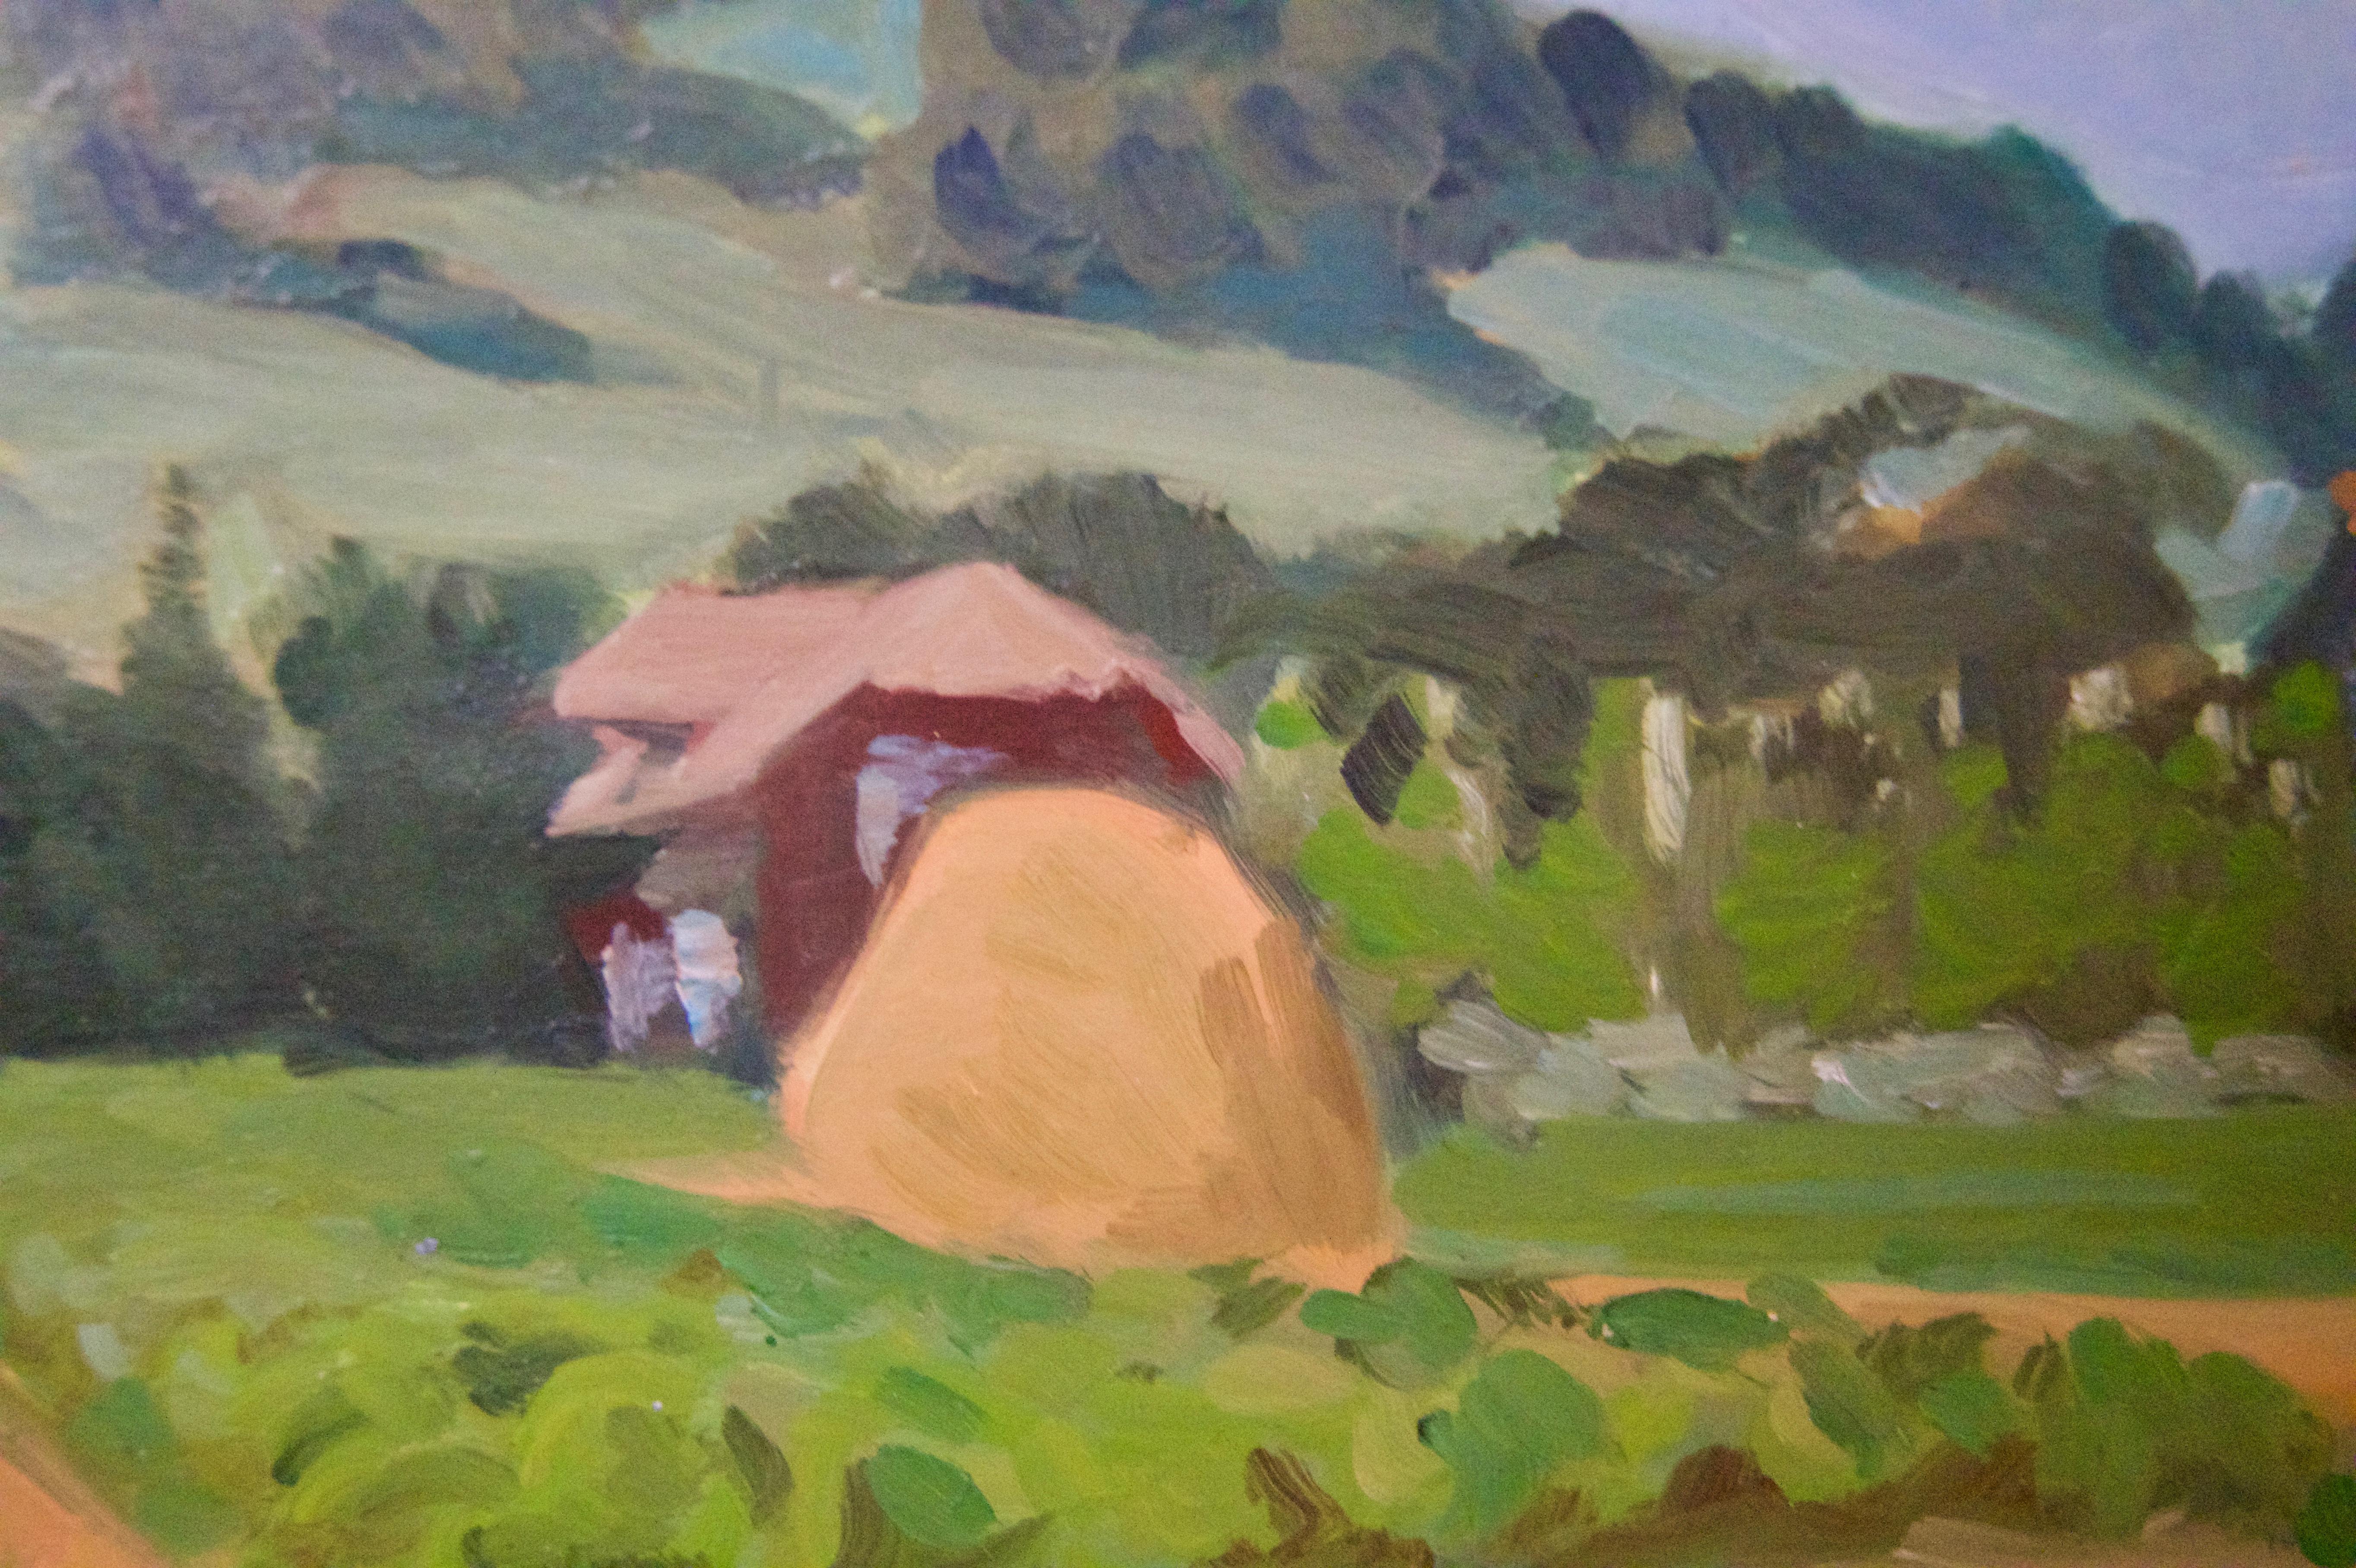 Pogorze Foothills - Mid 20th Century Oil Painting by Helena Krajewska - Poland - Brown Landscape Painting by Helena Malarewicz-Krajewska